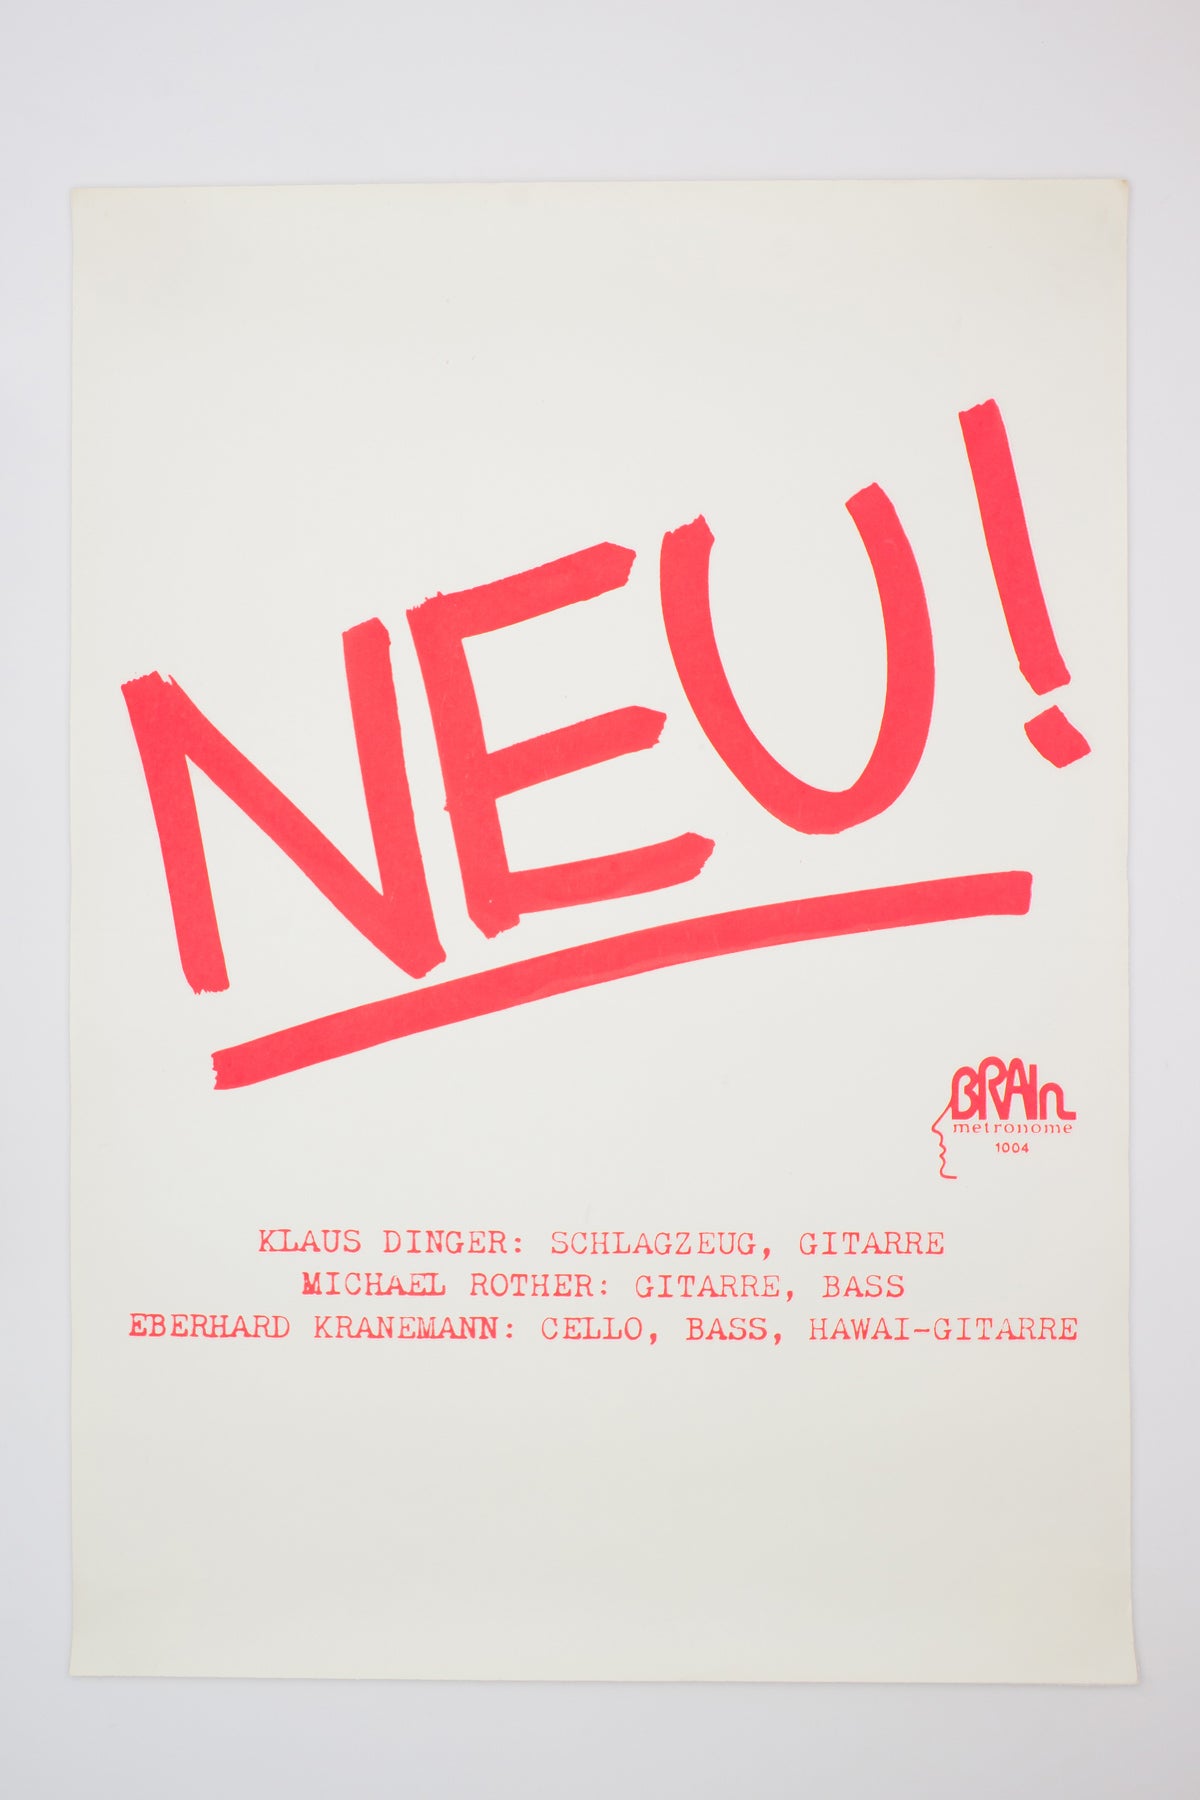 NEU! - Klaus Dinger & Michael Rother